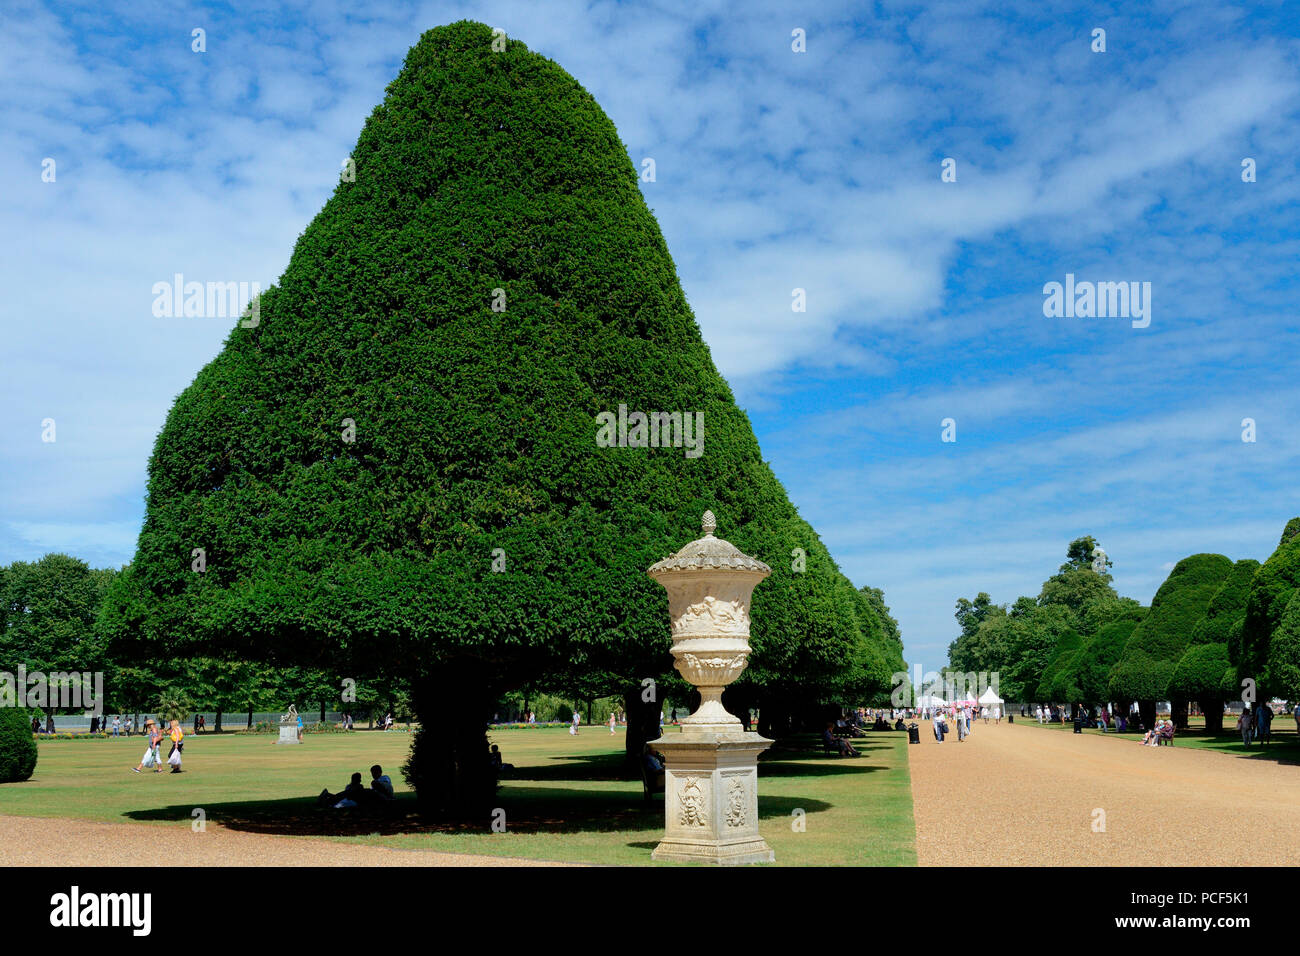 Eiben in Formschnitt, Eibenallee, Taxus baccata, Hampton Court Palace, England, Grossbritannien, Europa, Formschnitteibe Stock Photo